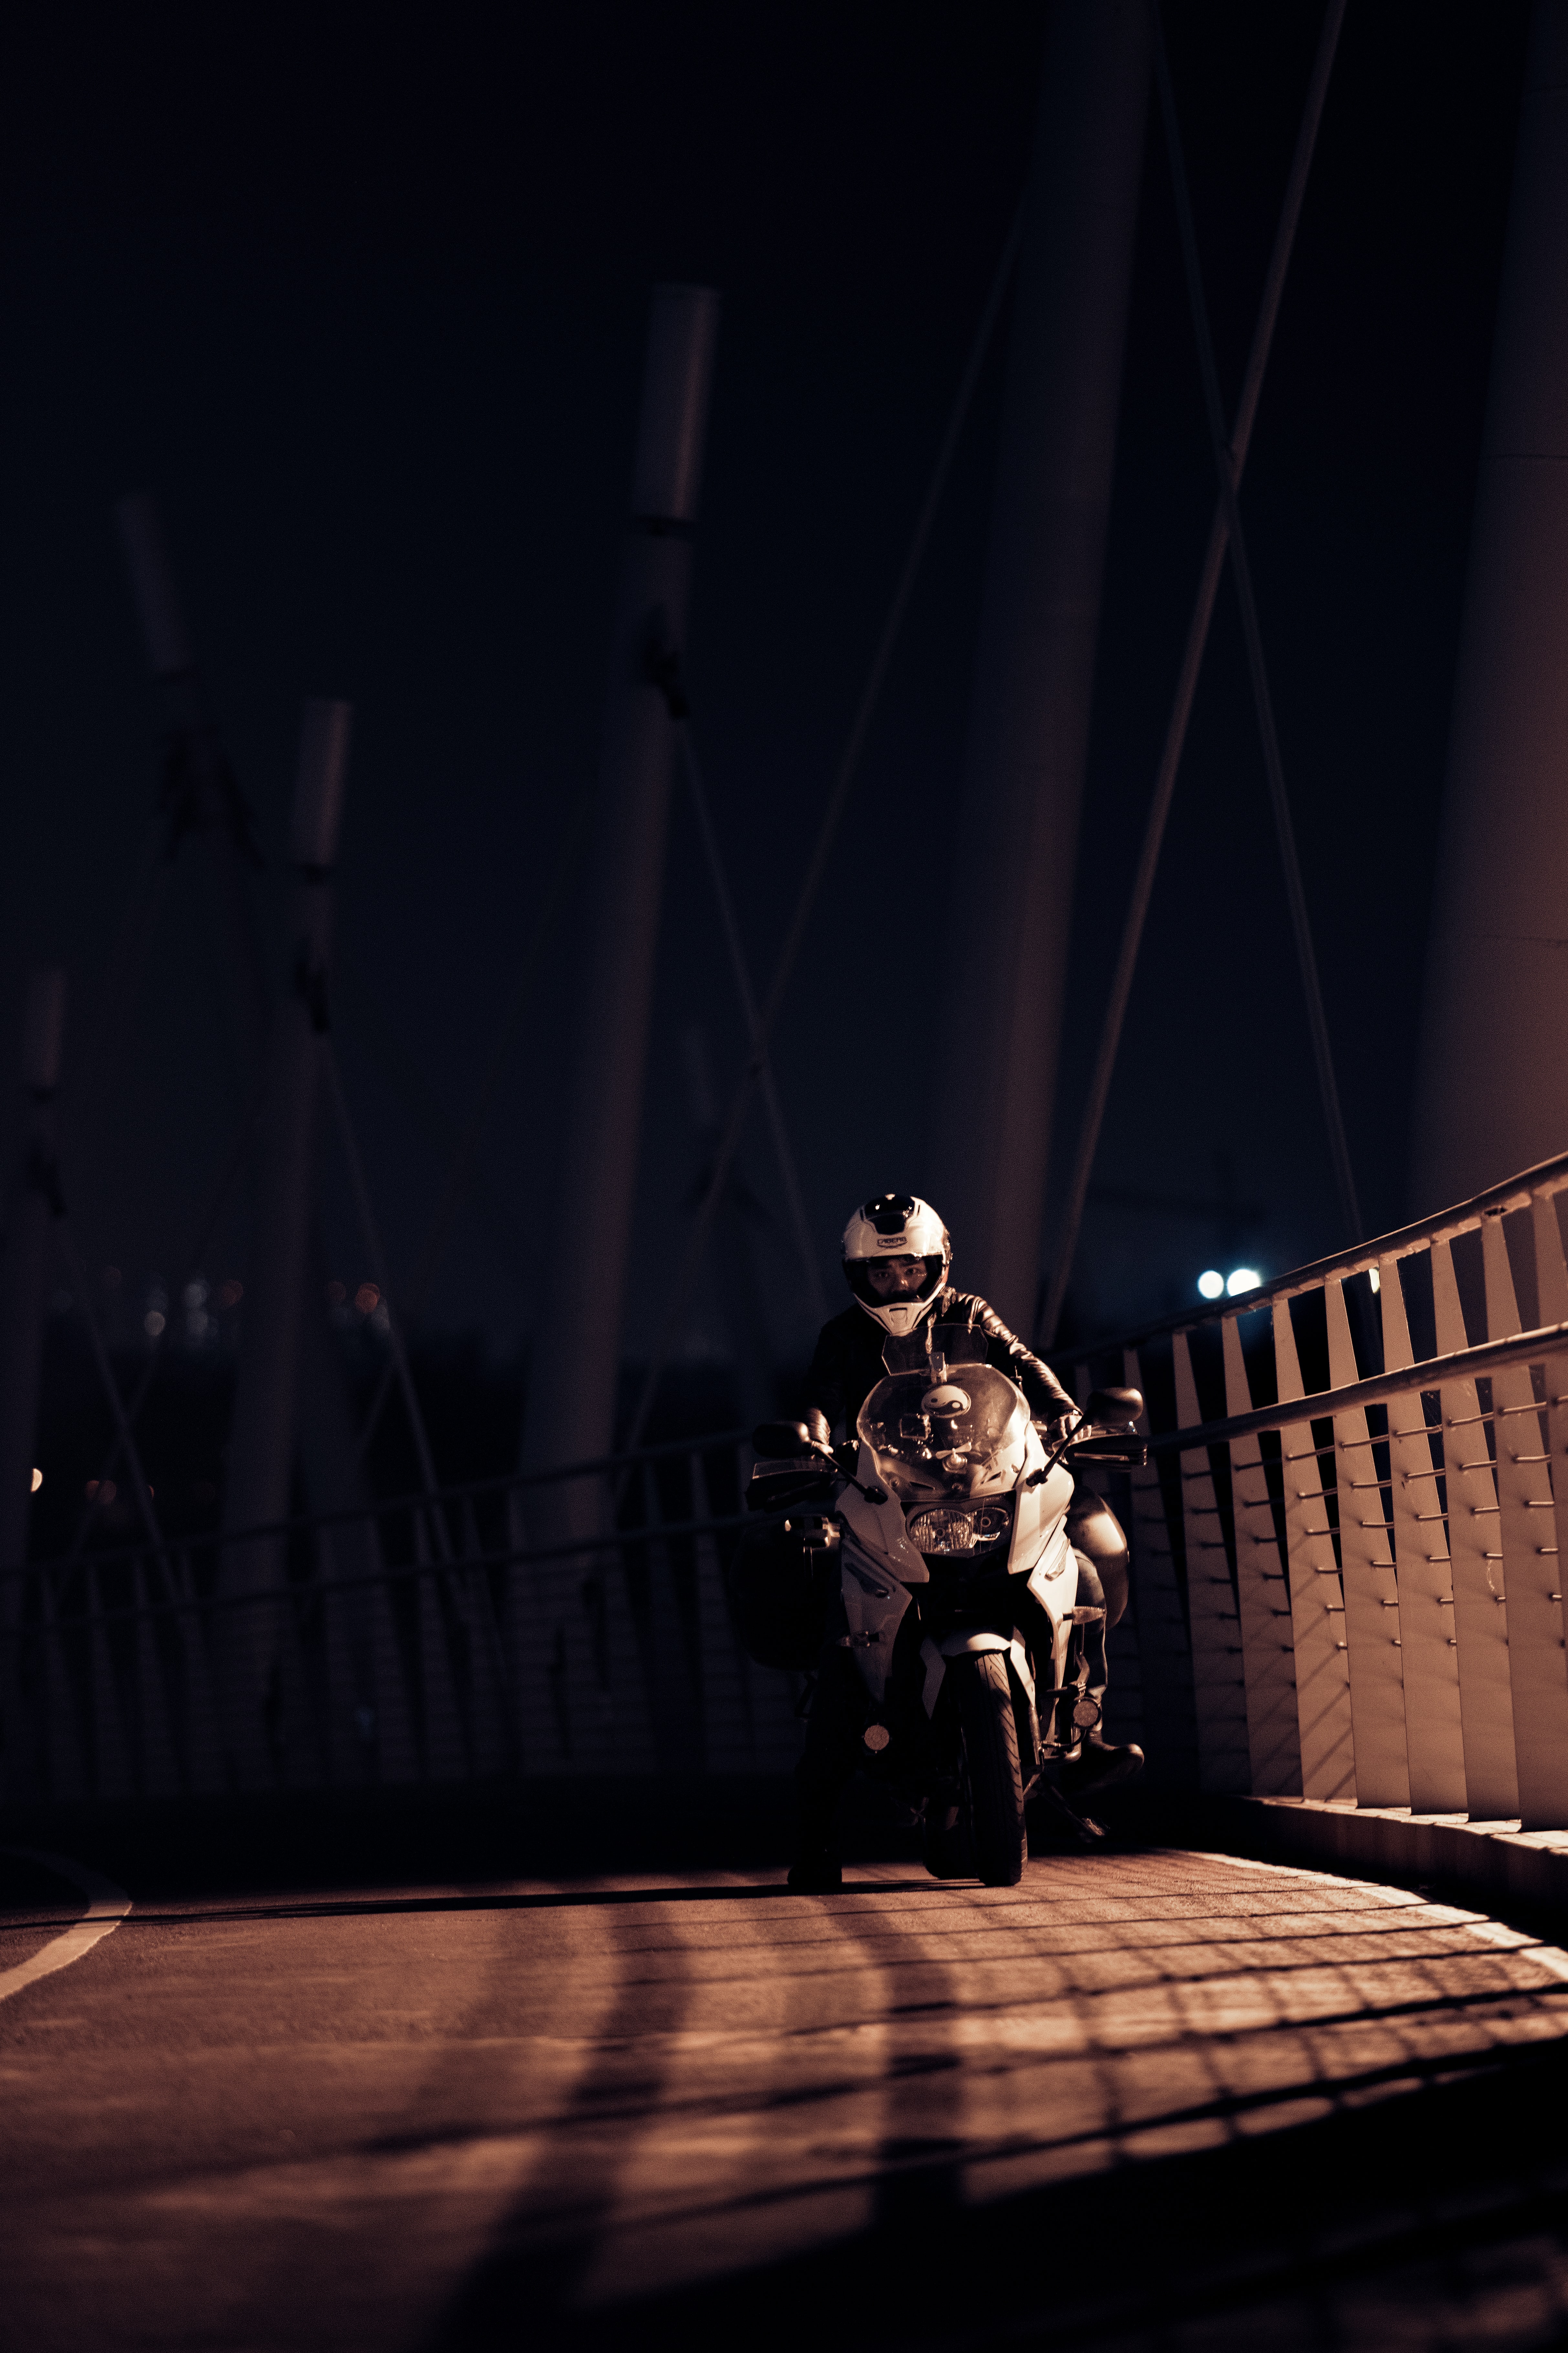 Download PC Wallpaper night, motorcycles, motorcyclist, helmet, motorcycle